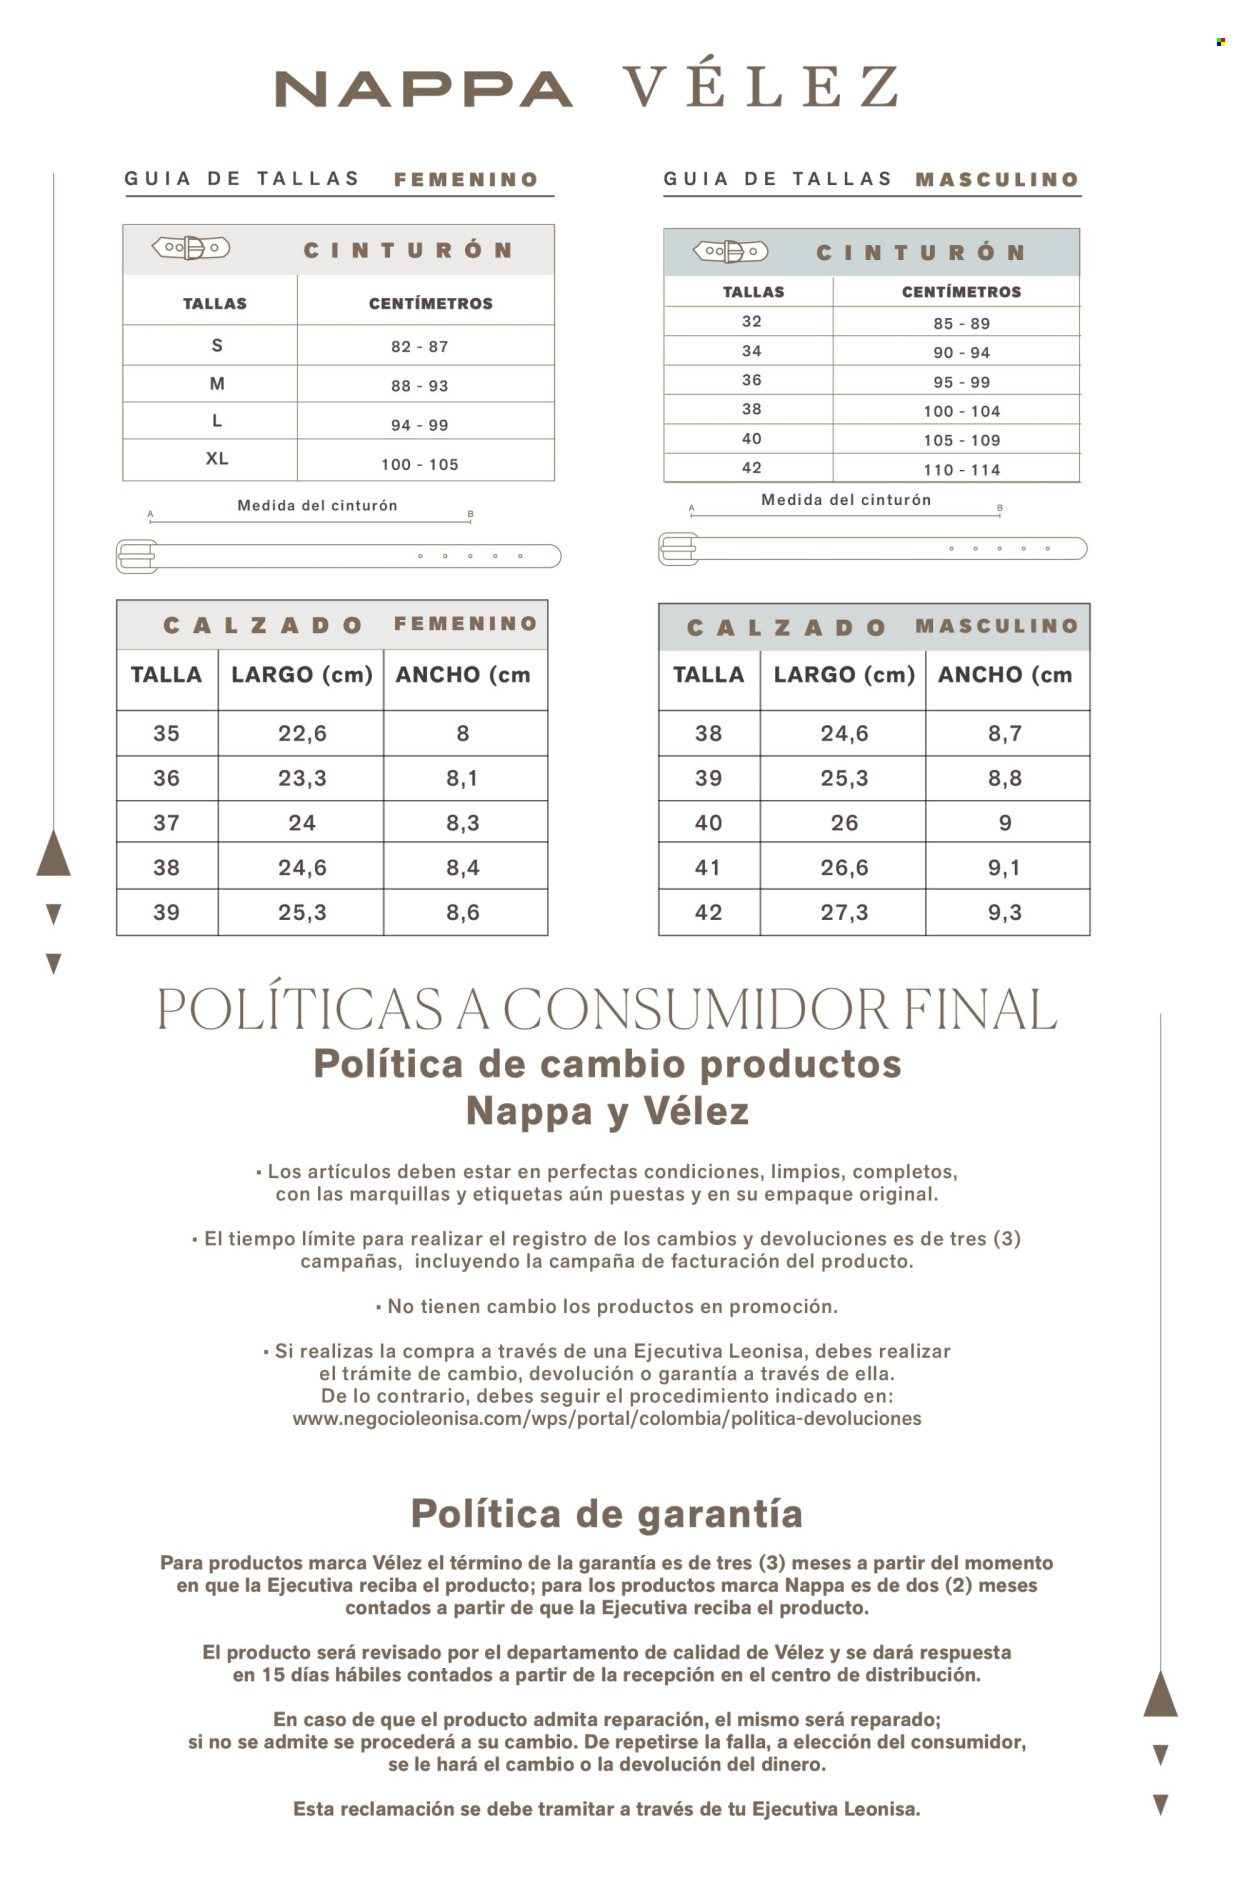 Catálogo Leonisa - 02.21.2024 - 04.21.2024.